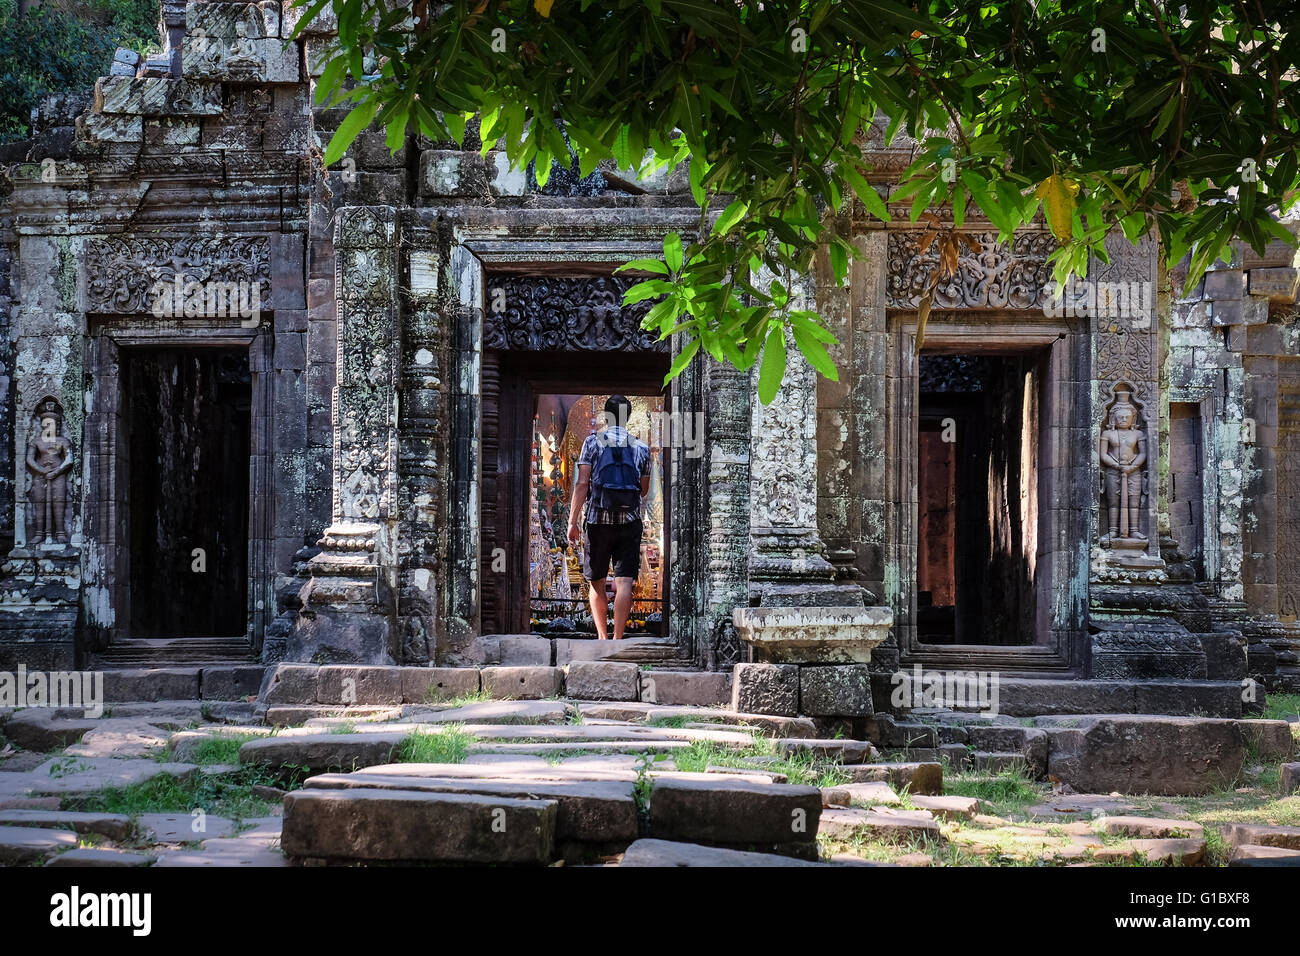 A tourist makes his way through the ancient ruins of Wat Phou near Champasak, Laos. Stock Photo